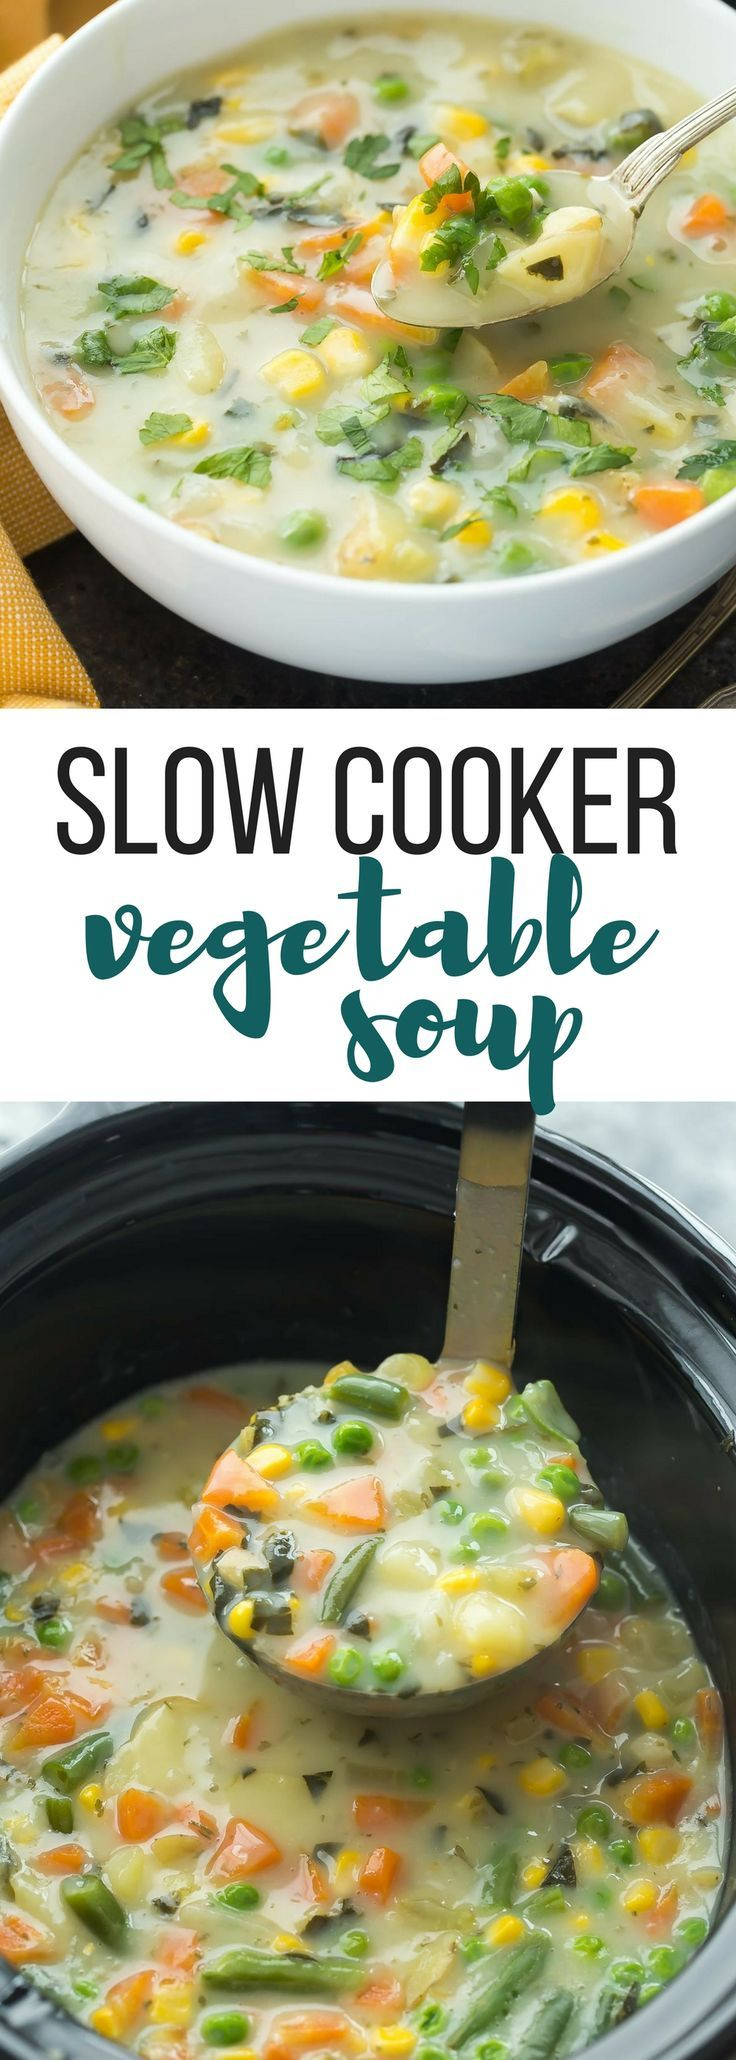 Vegetarian Crock Pot Recipes Healthy
 Best 25 Healthy meals ideas on Pinterest